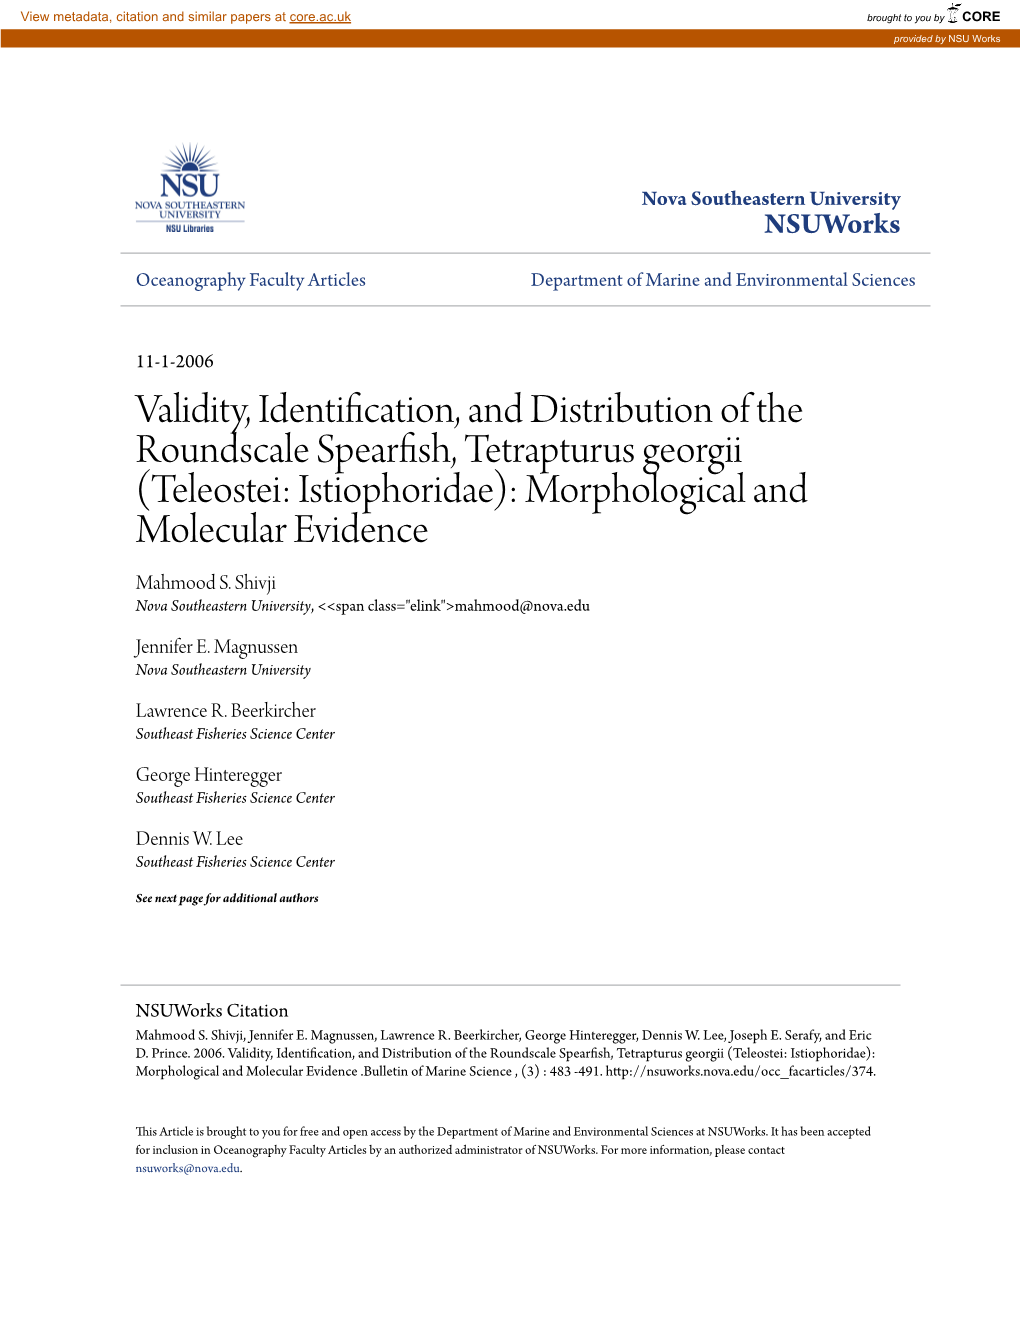 Validity, Identification, and Distribution of the Roundscale Spearfish, Tetrapturus Georgii (Teleostei: Istiophoridae): Morphological and Molecular Evidence Mahmood S